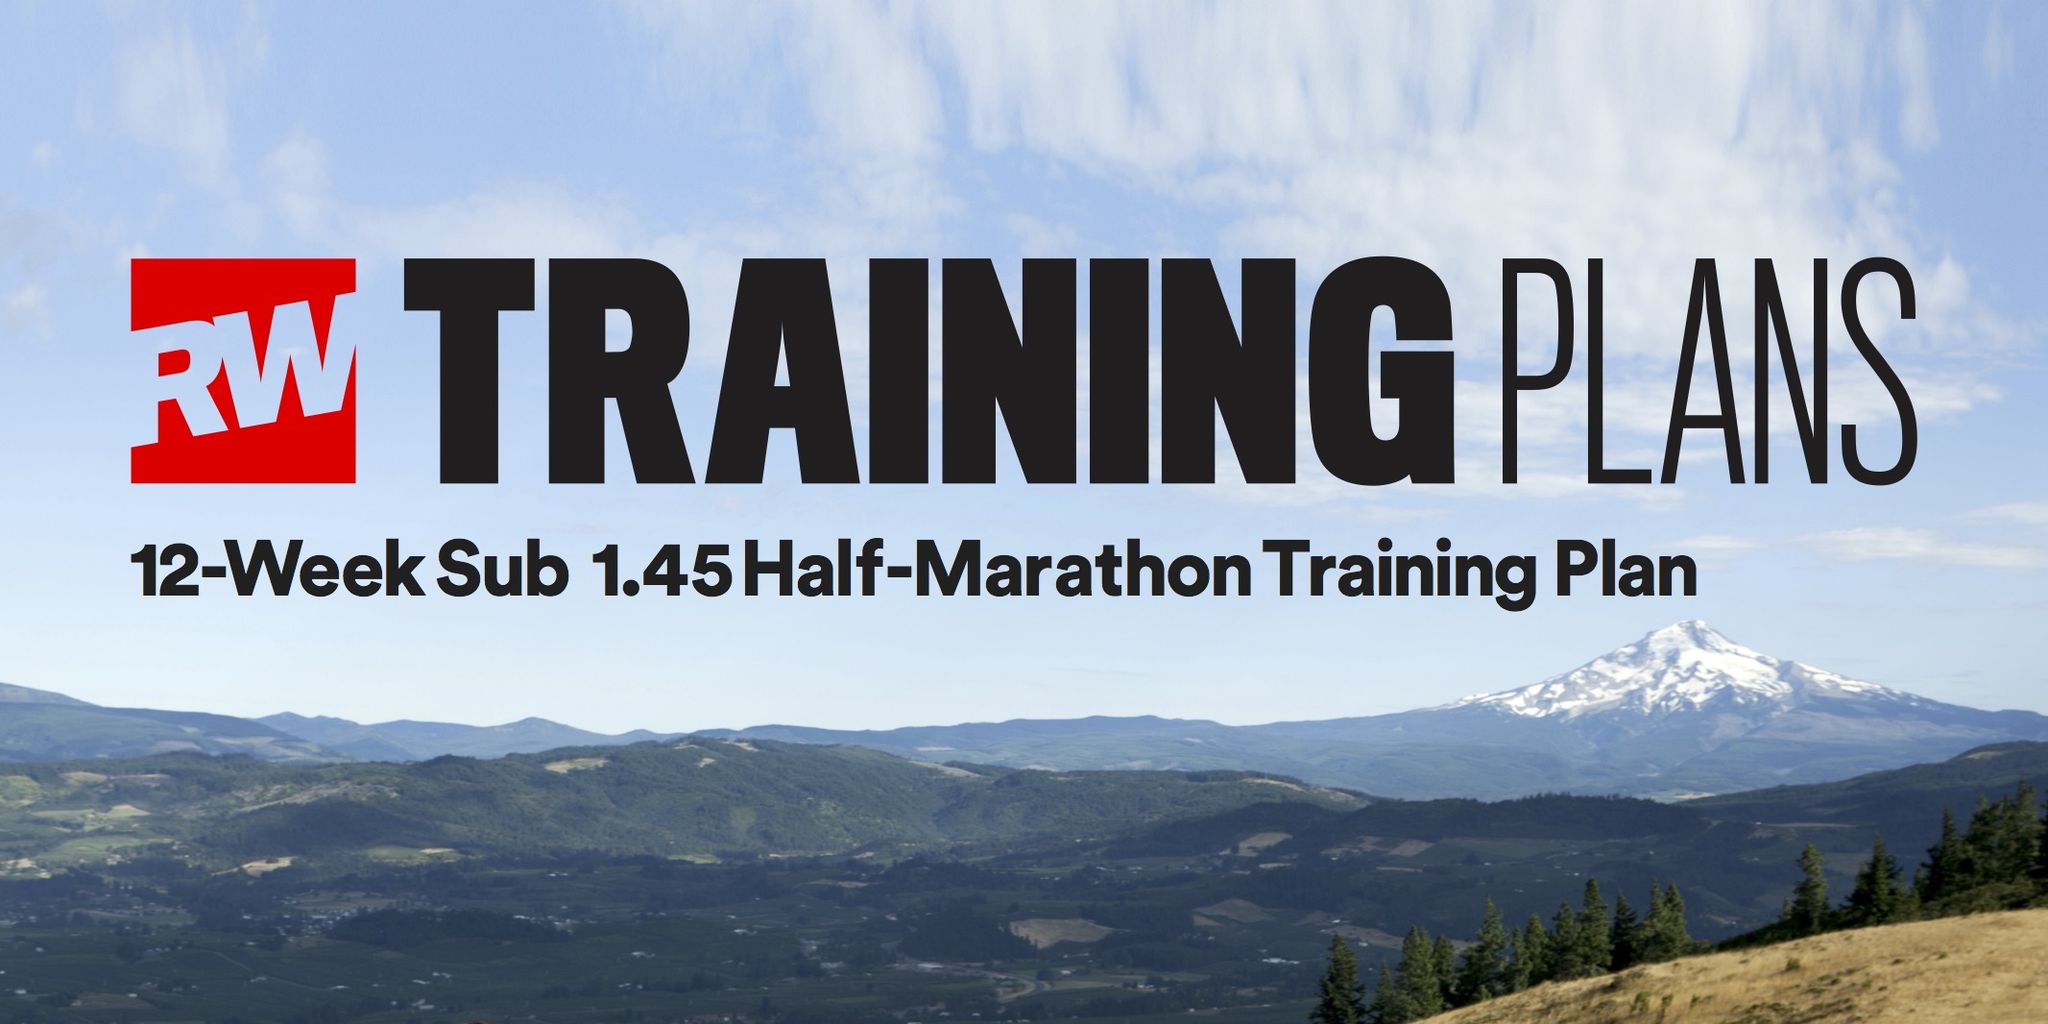 Sub 1:45 half marathon training plan